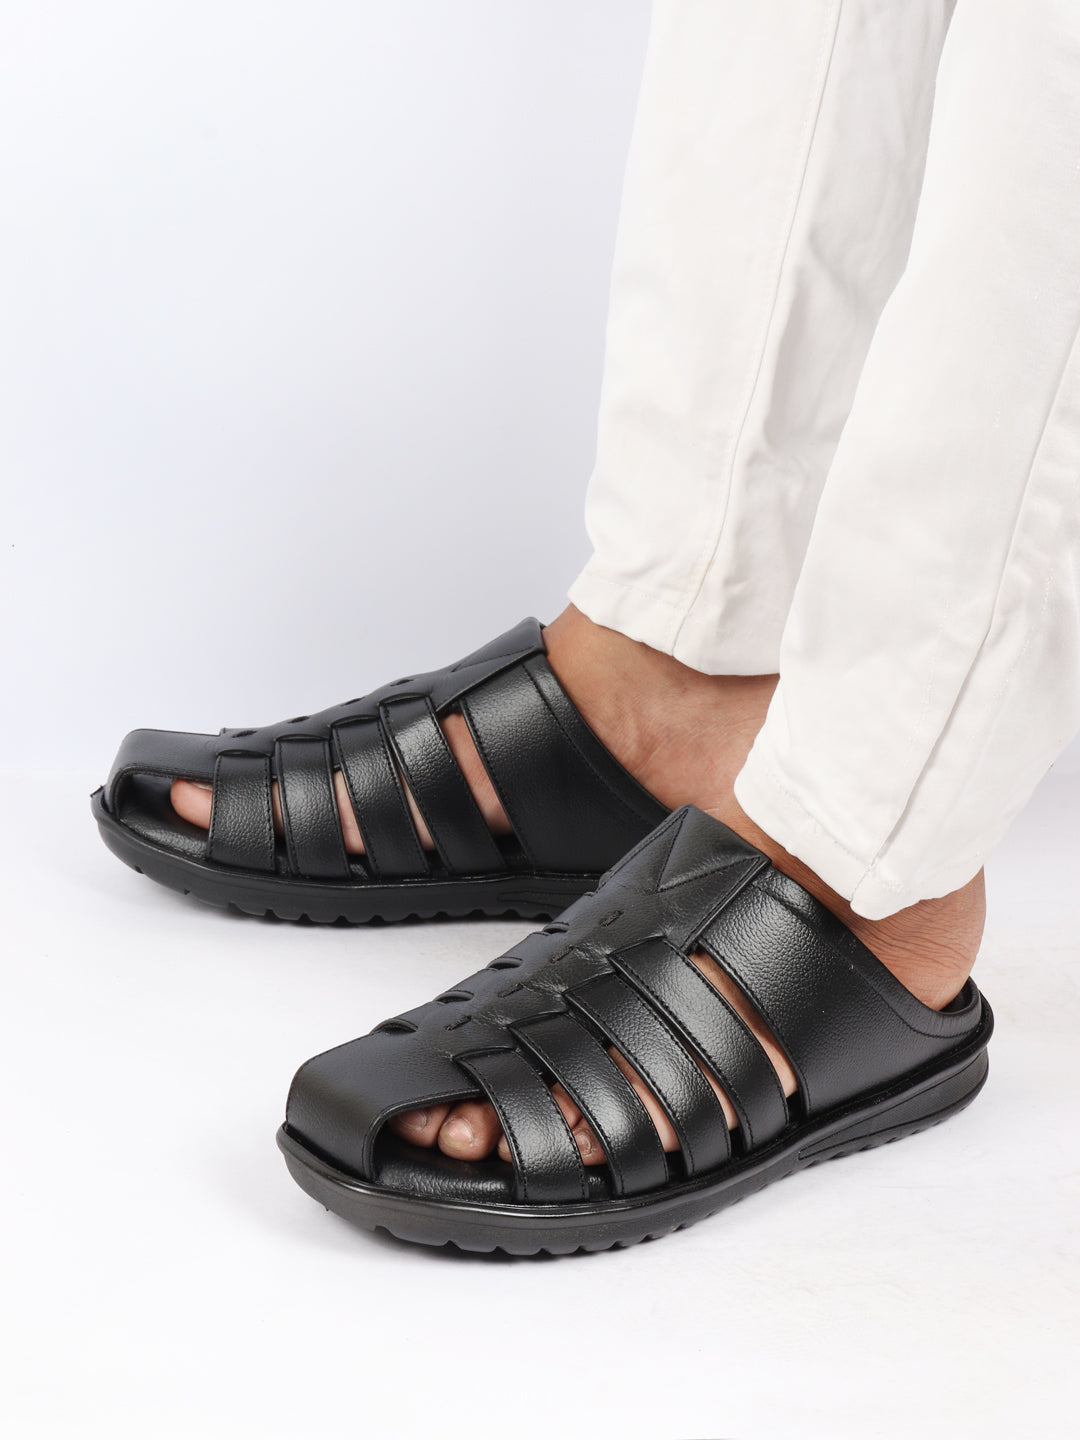 Leather Huarache Sandals | Slip-On Huaraches